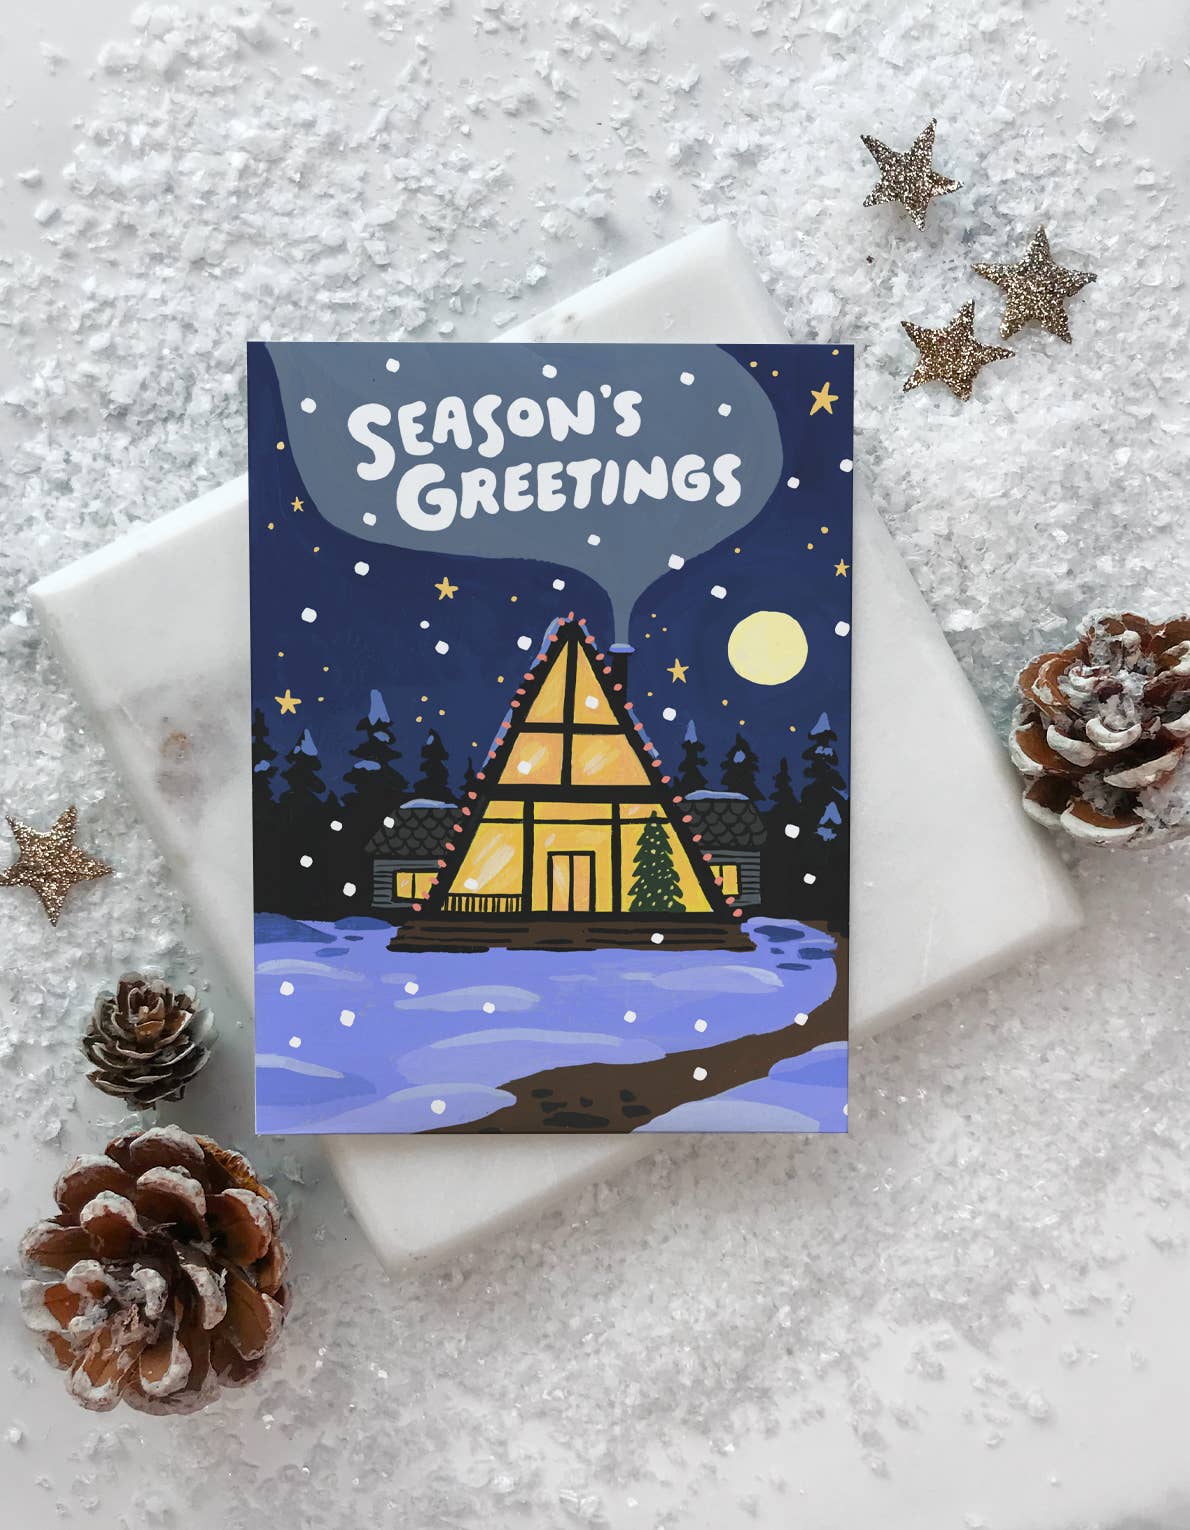 Season's Greetings A-Frame Snowy cabin holiday greeting card